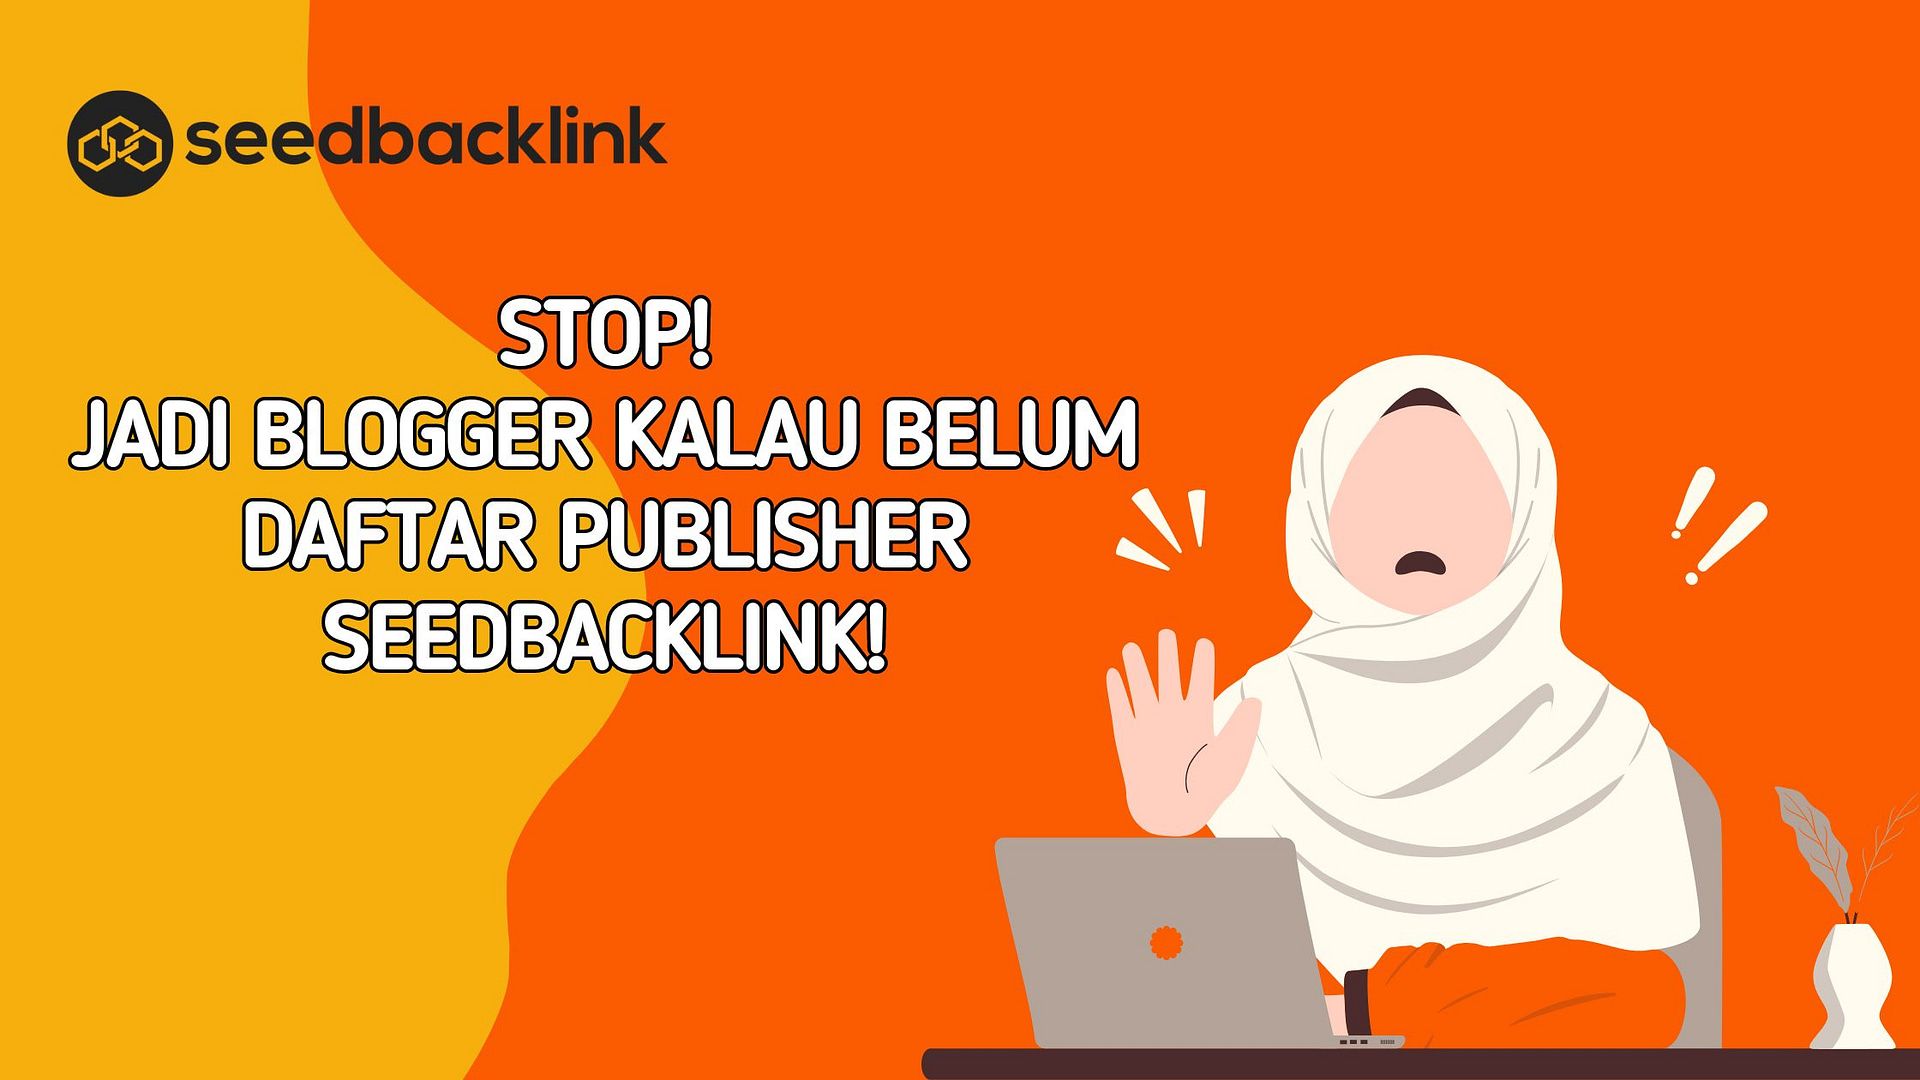 Publisher Seedbacklink